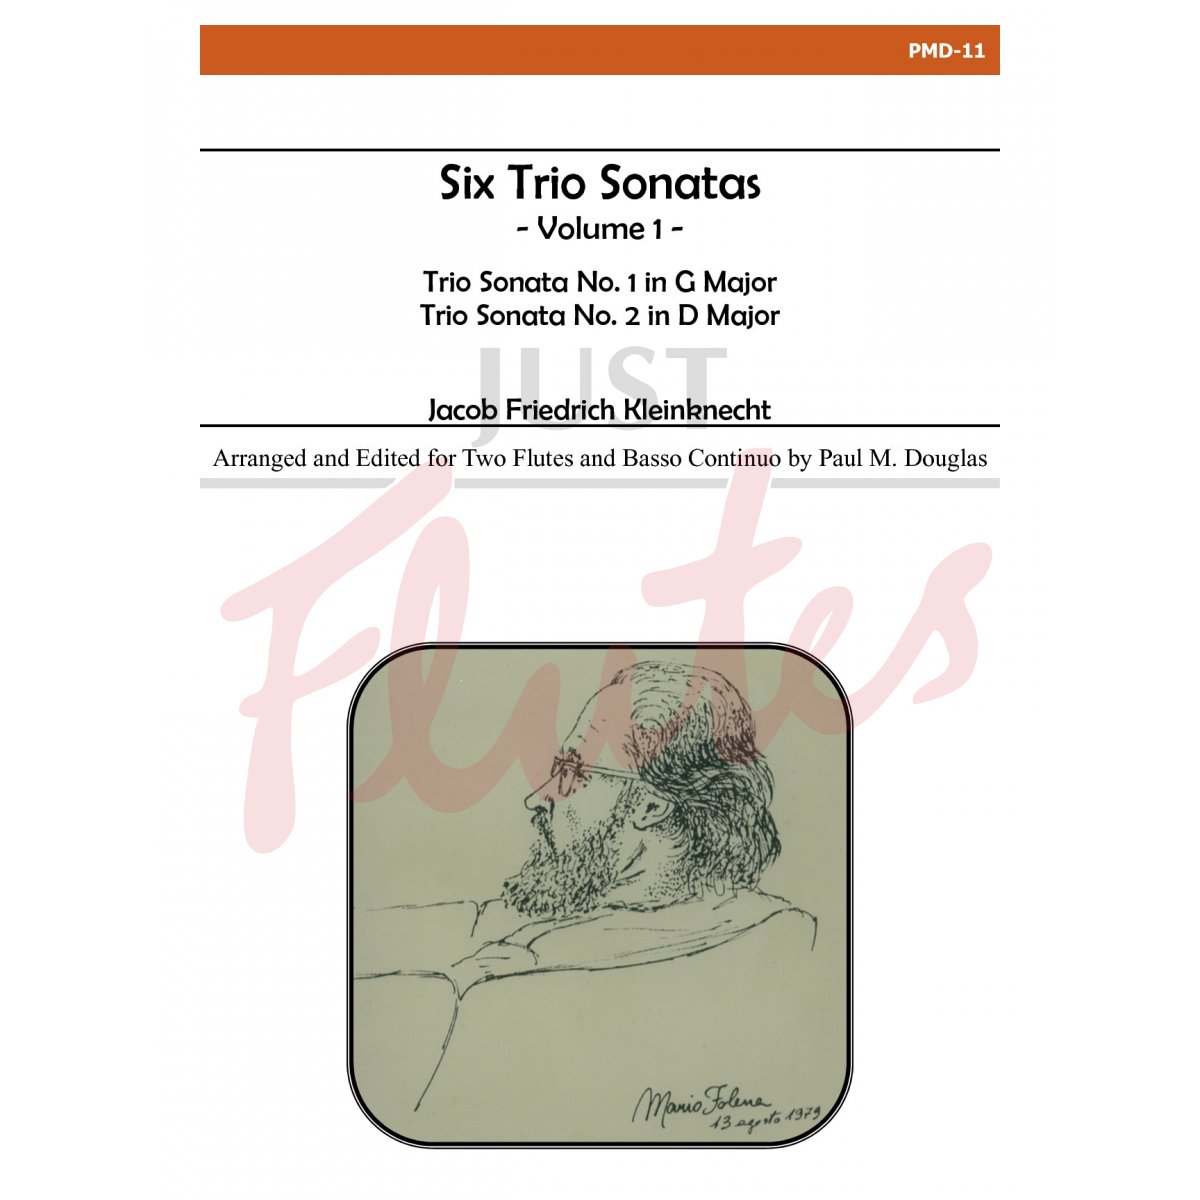 Six Trio Sonatas, Vol. 1